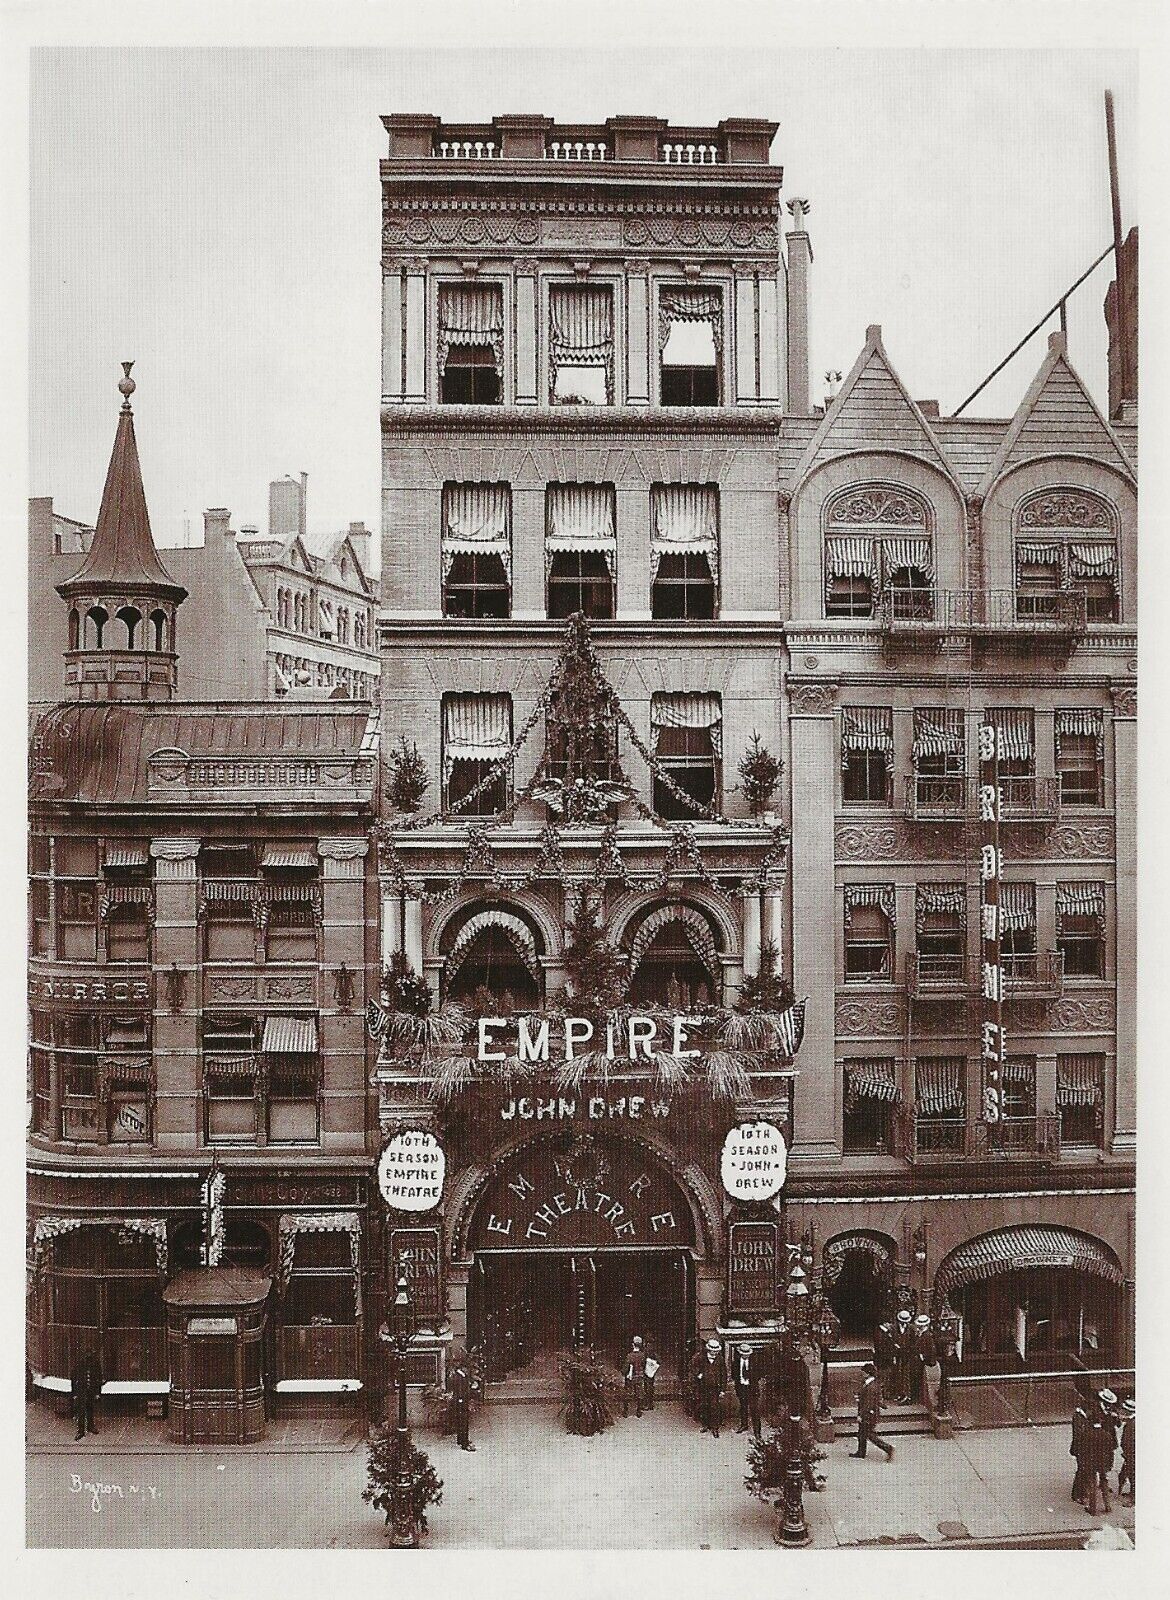 Postcard New York City Empire Theatre 1901-02 John Drew on Marquee MINT (Repro)